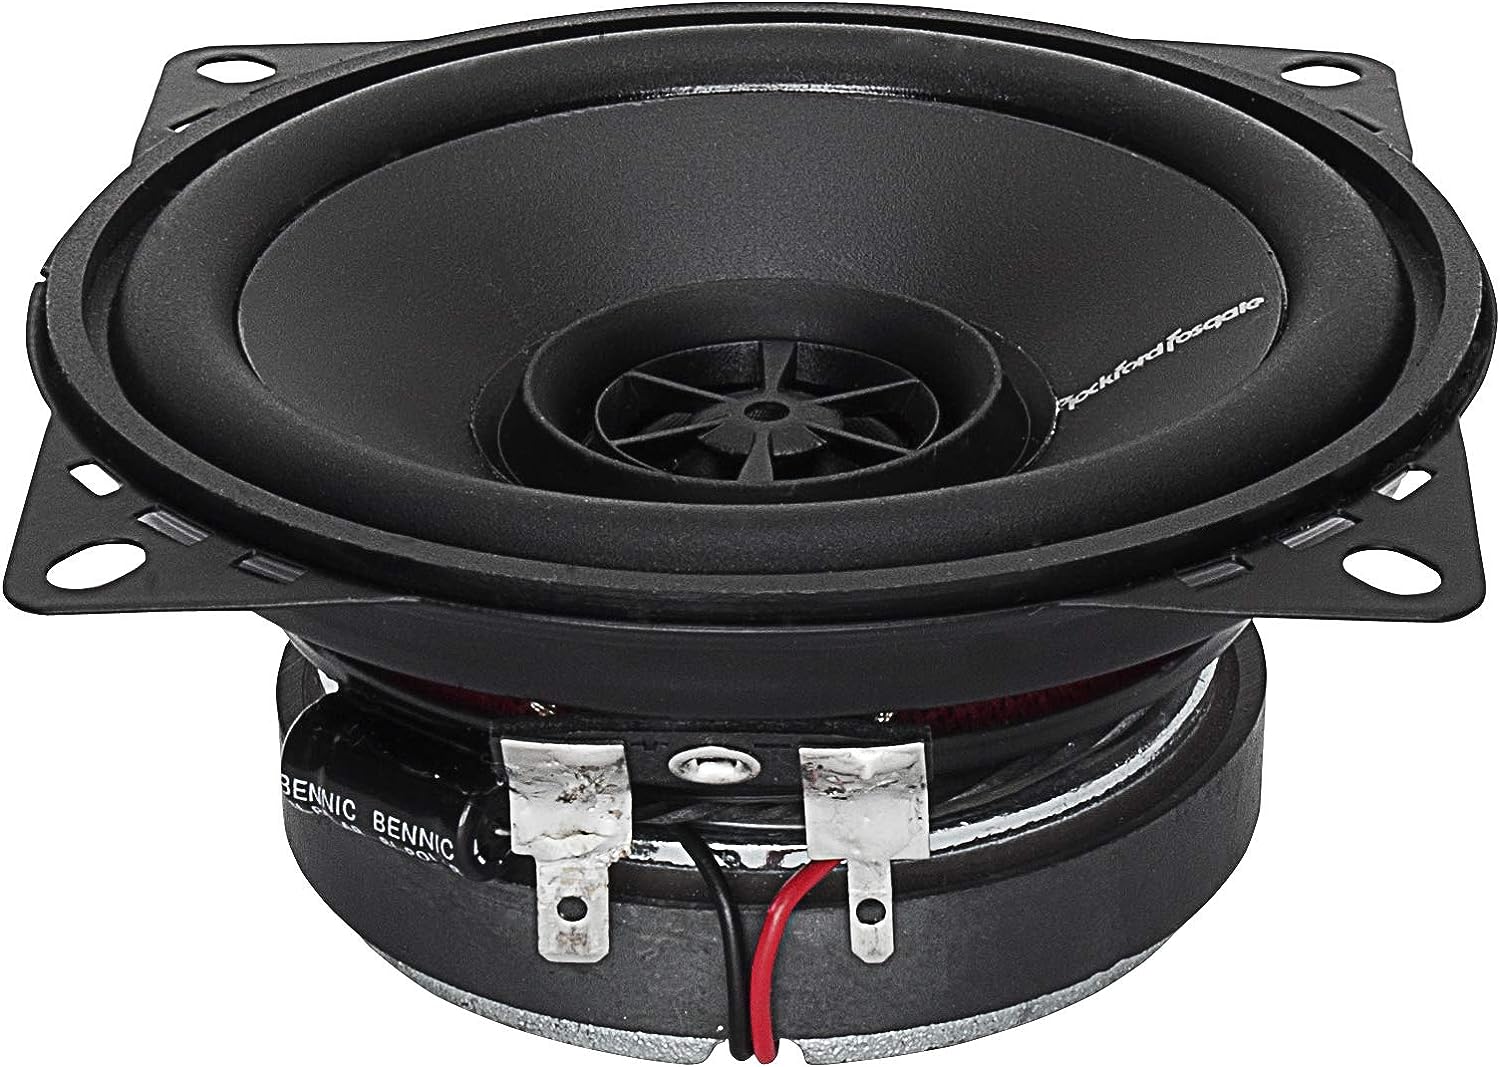 Rockford Fosgate R14X2 4" Inch 120W 2-Way Car Stereo Speakers